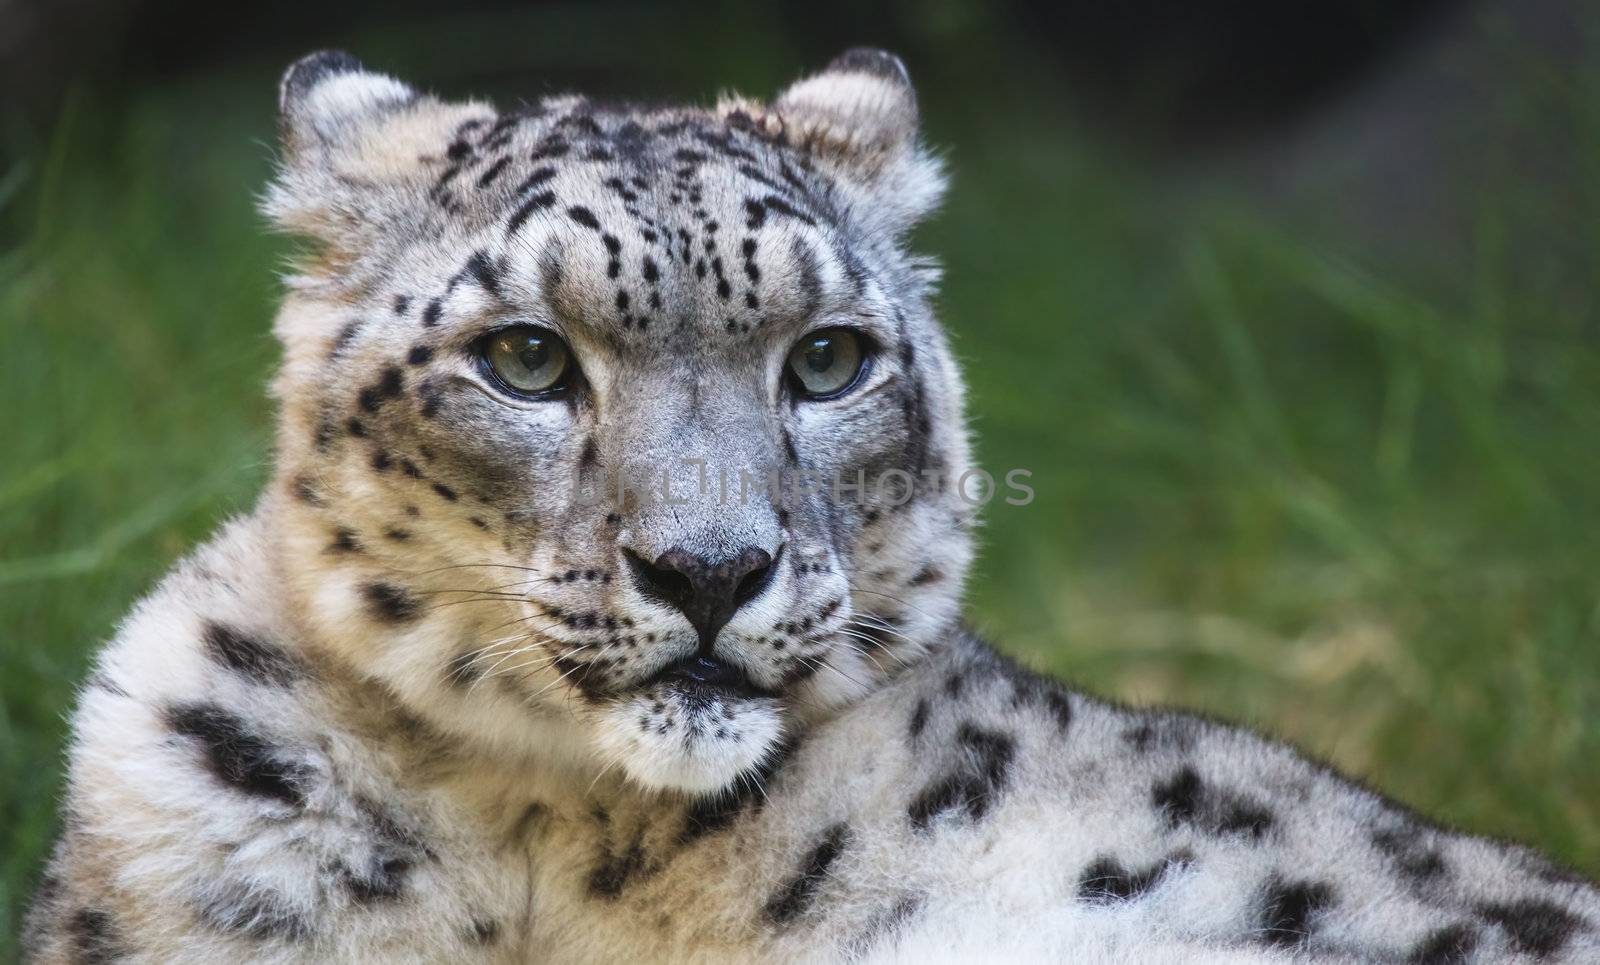 Snow leopard looking right by bobkeenan